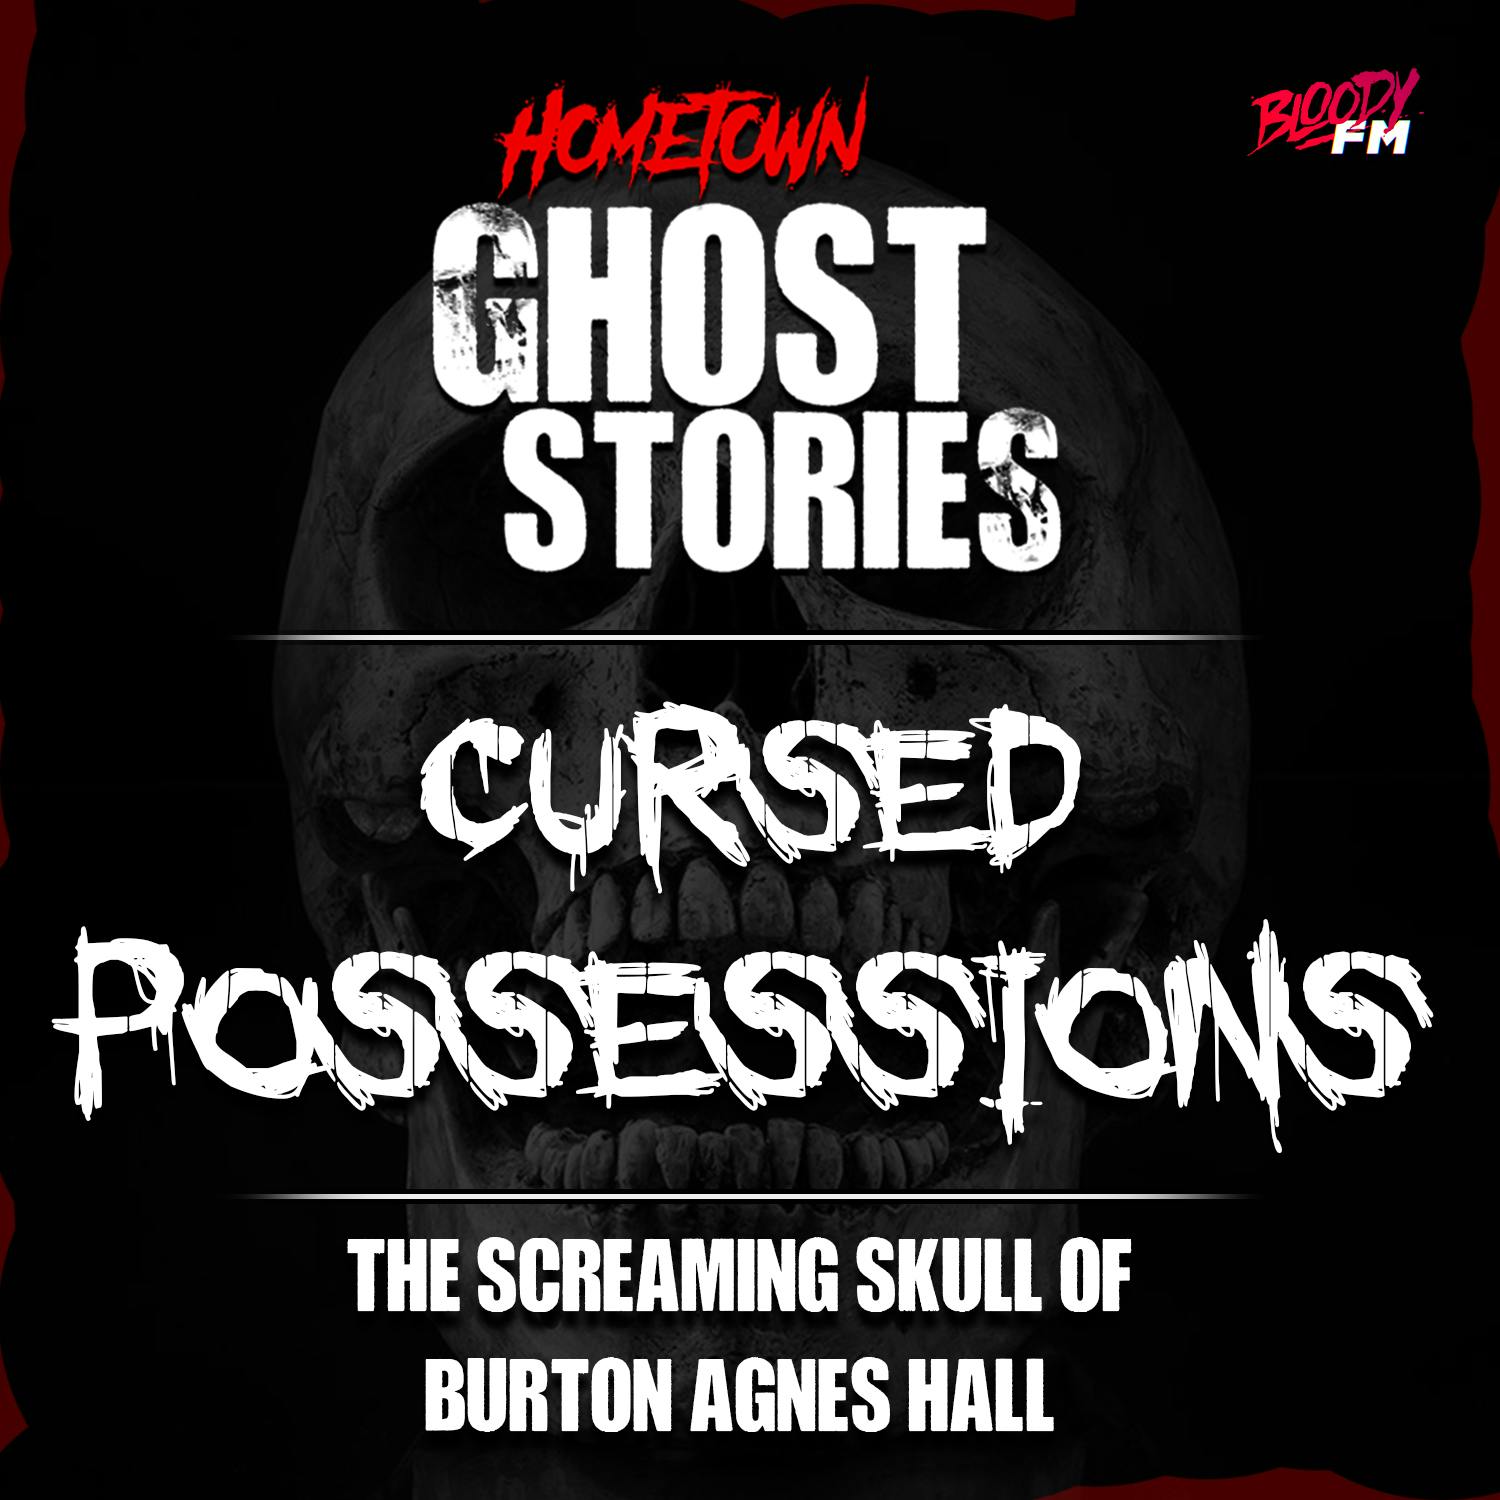 Cursed Possessions: The Screaming Skull of Burton Agnes Hall